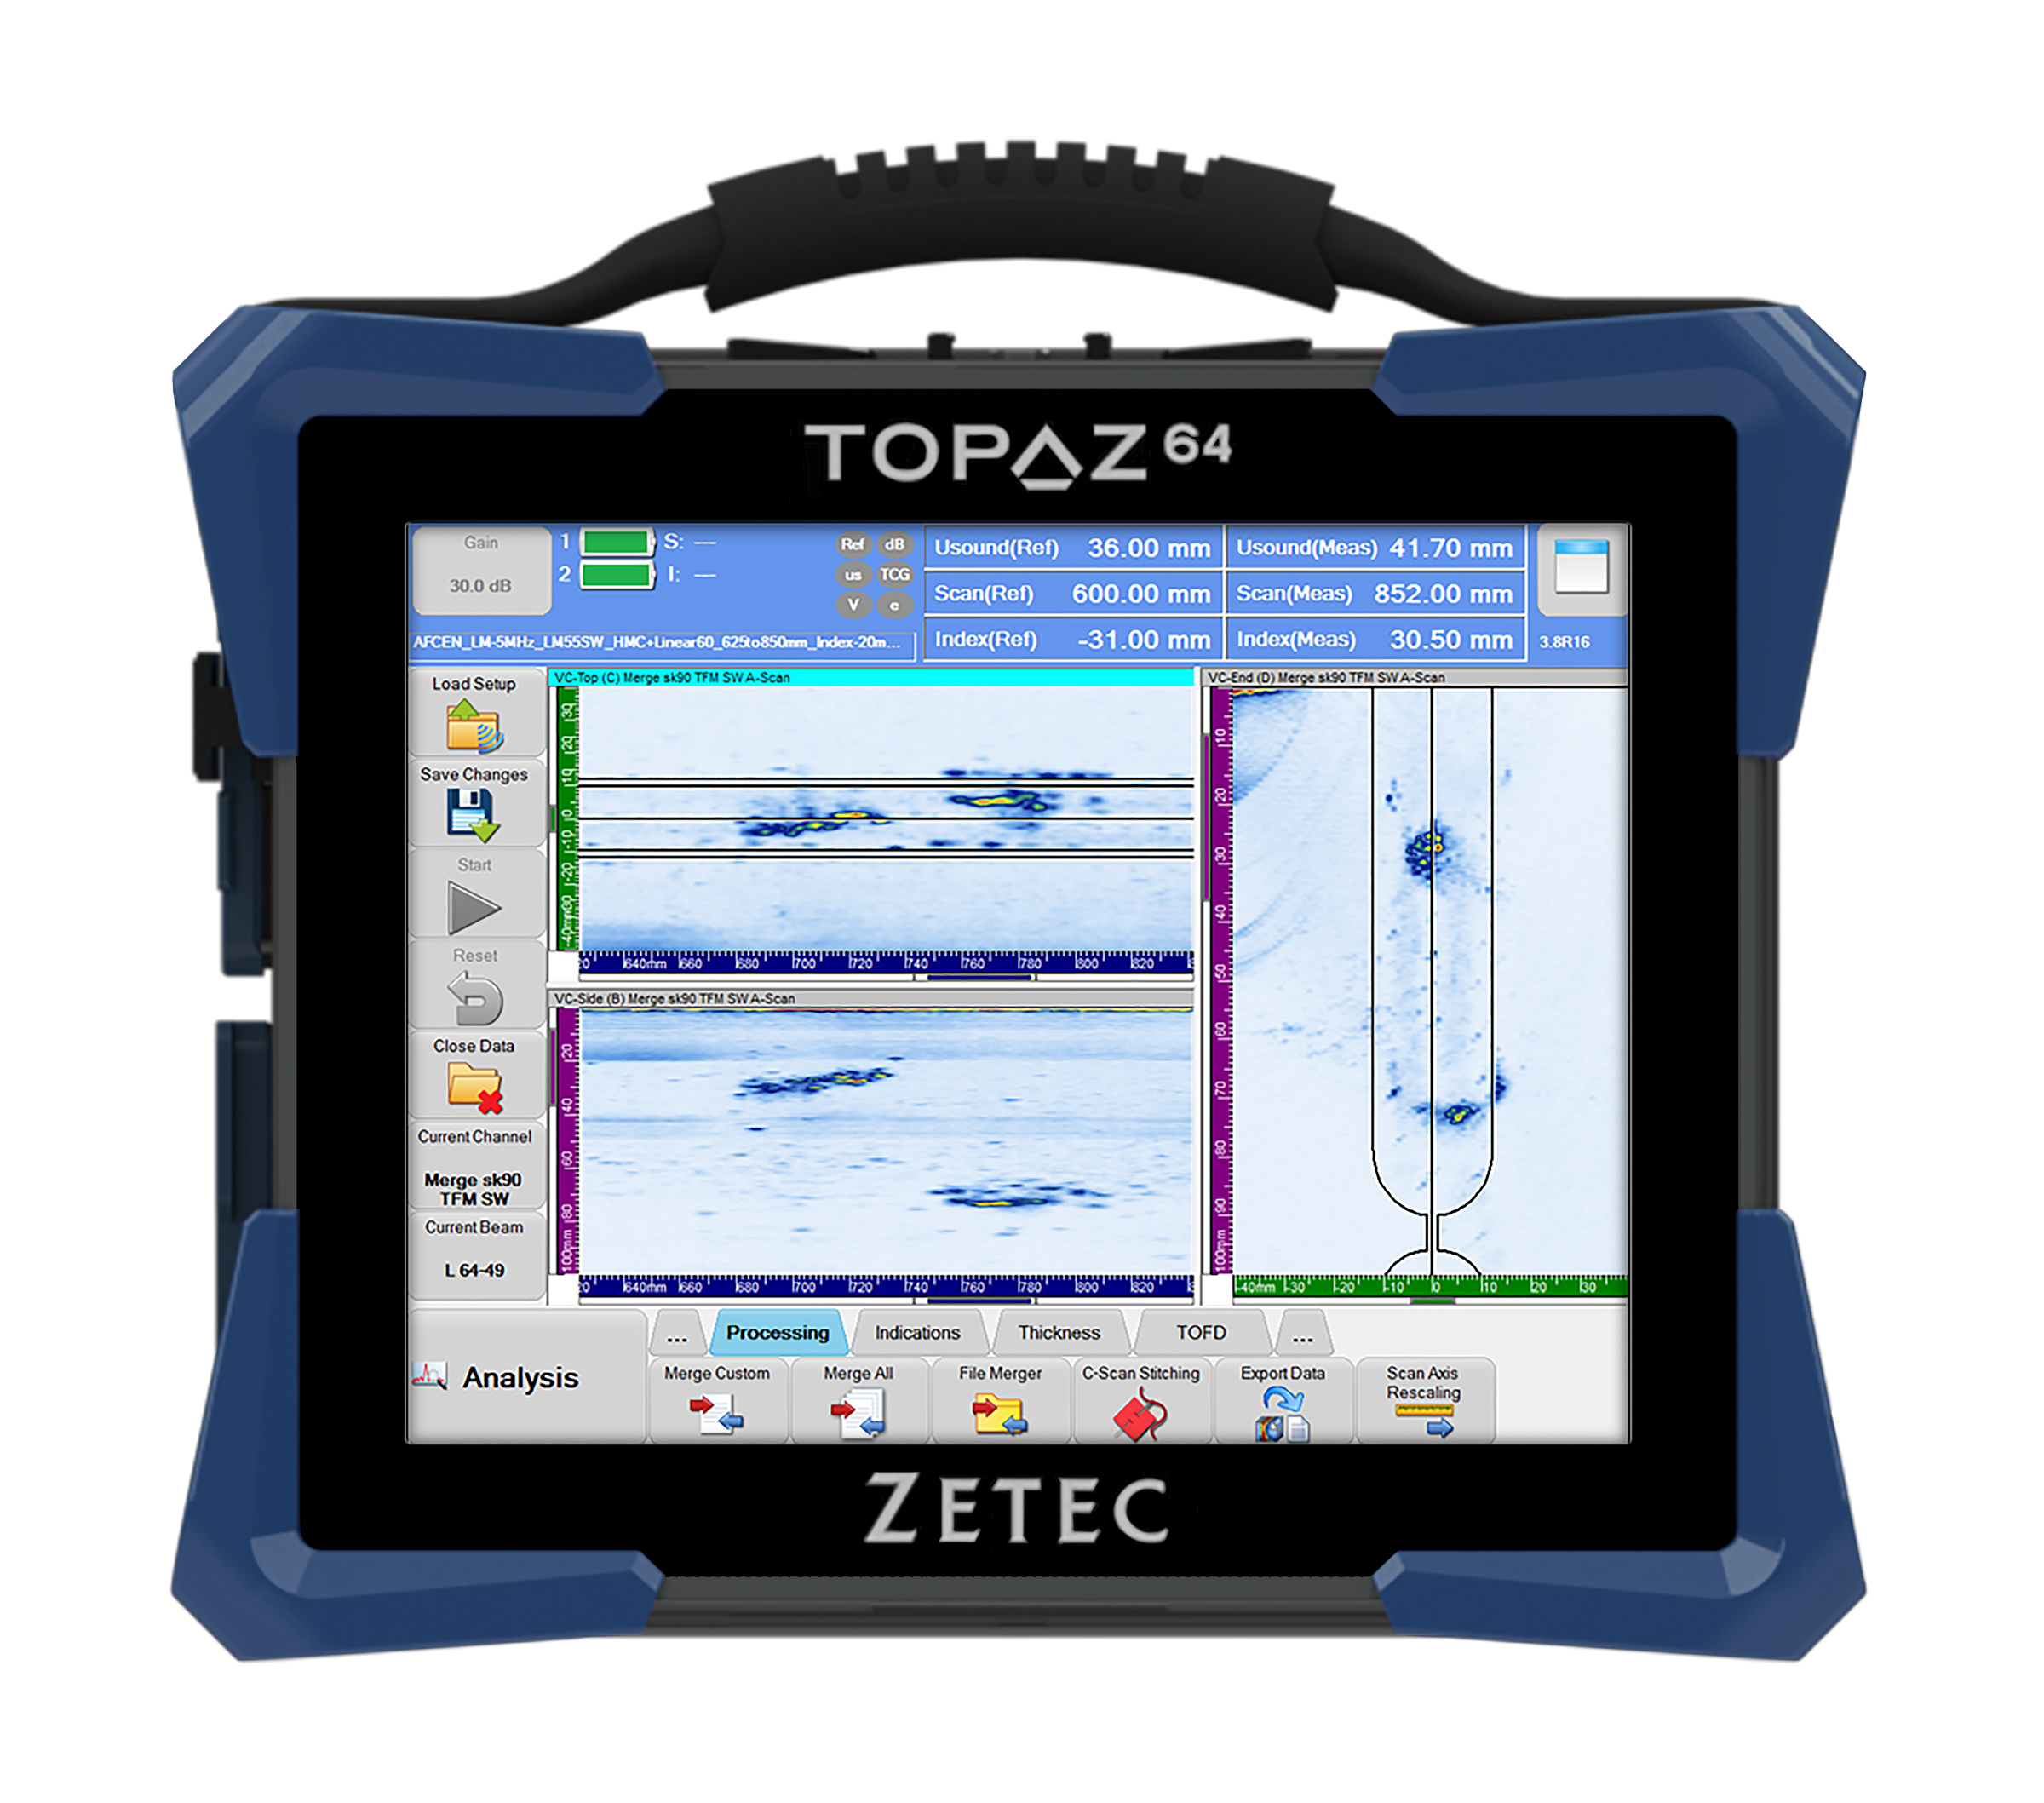 Zetec Introduces TOPAZ64 Ultra-Intelligent 64-Channel Phased Array UT Instrument